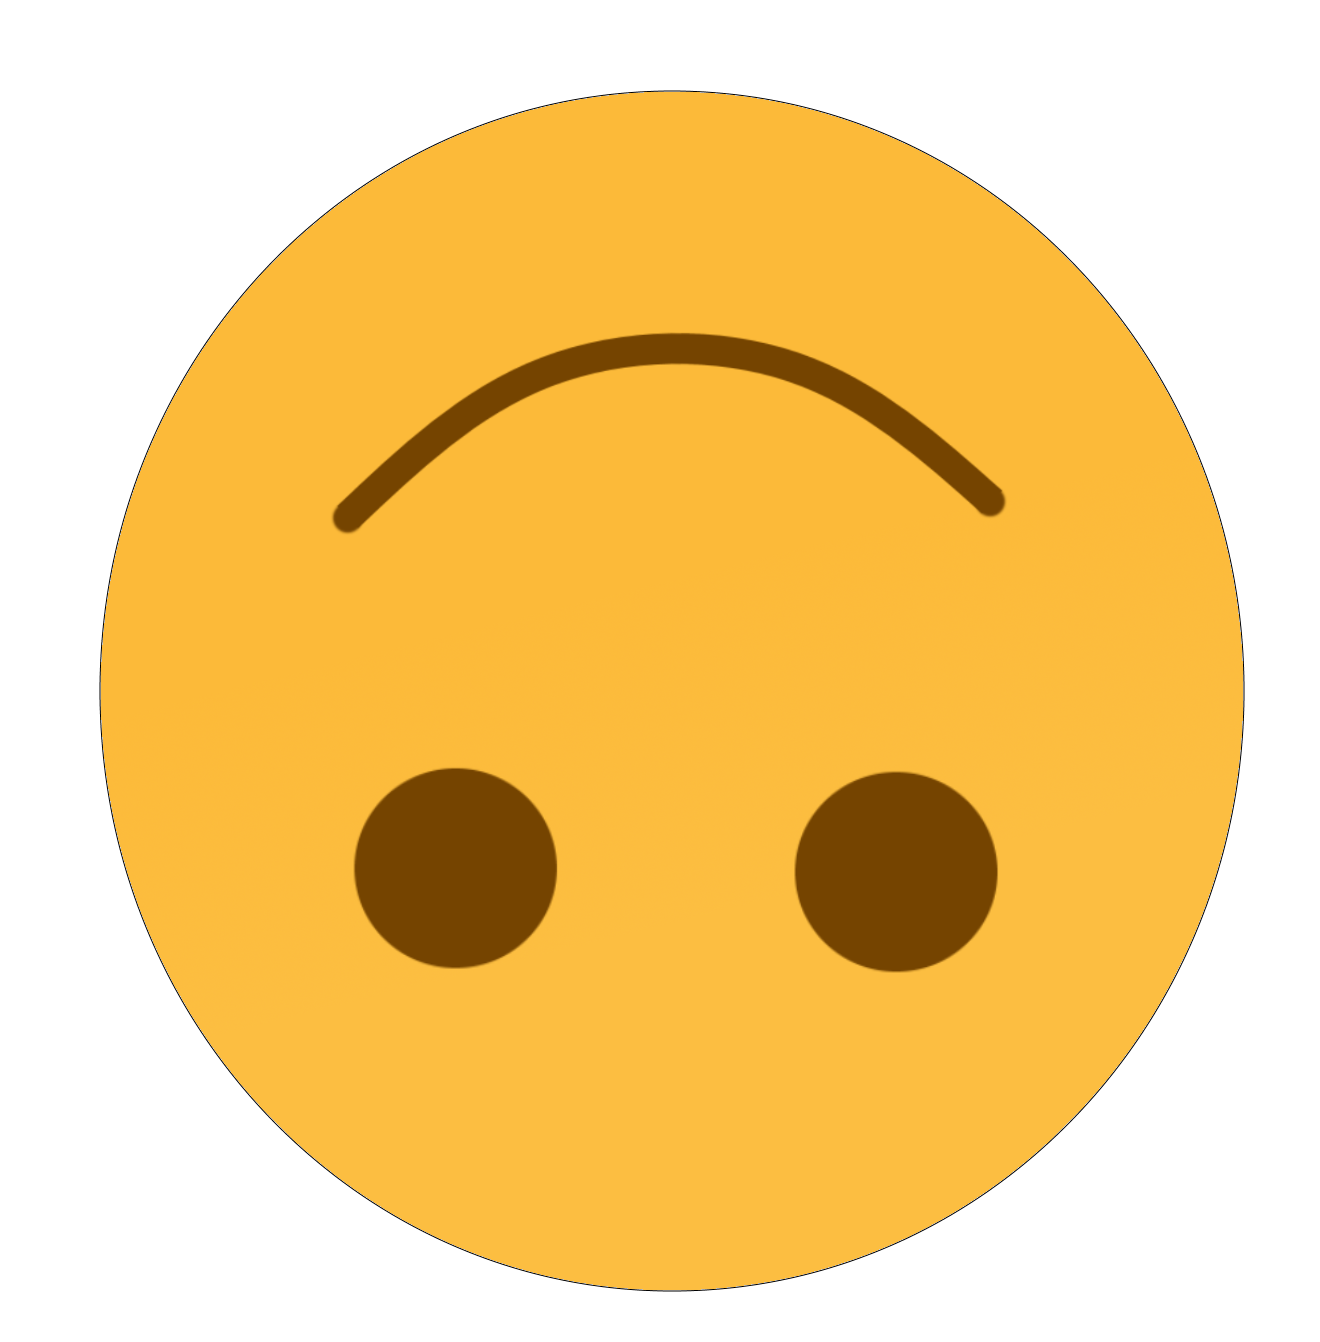 Download PNG image - Yellow Face Emoji PNG File 